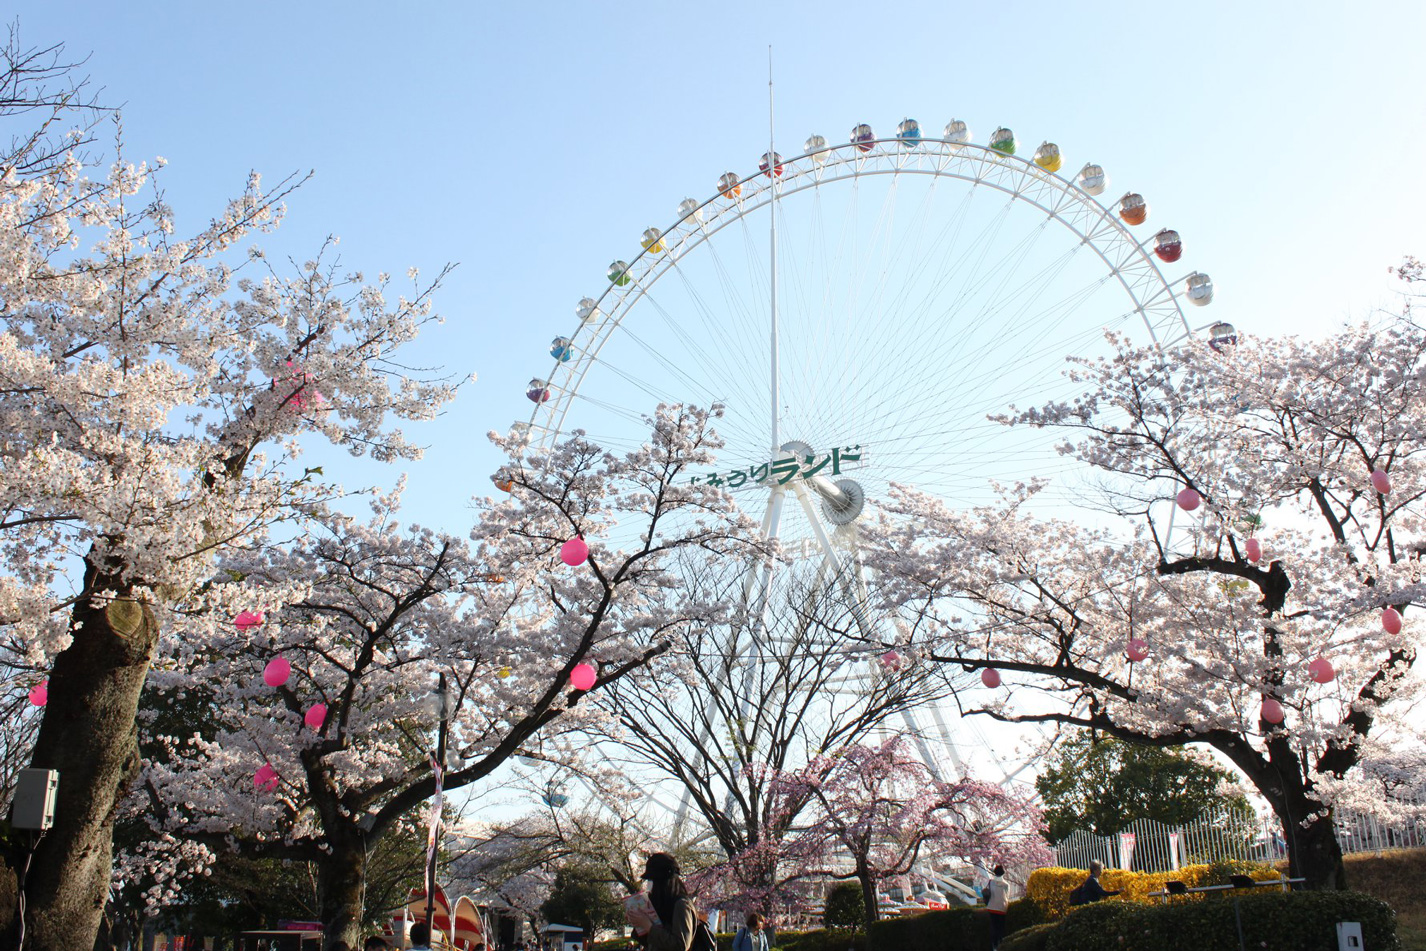 Ferris Wheel at Yomiuriland in Tokyo